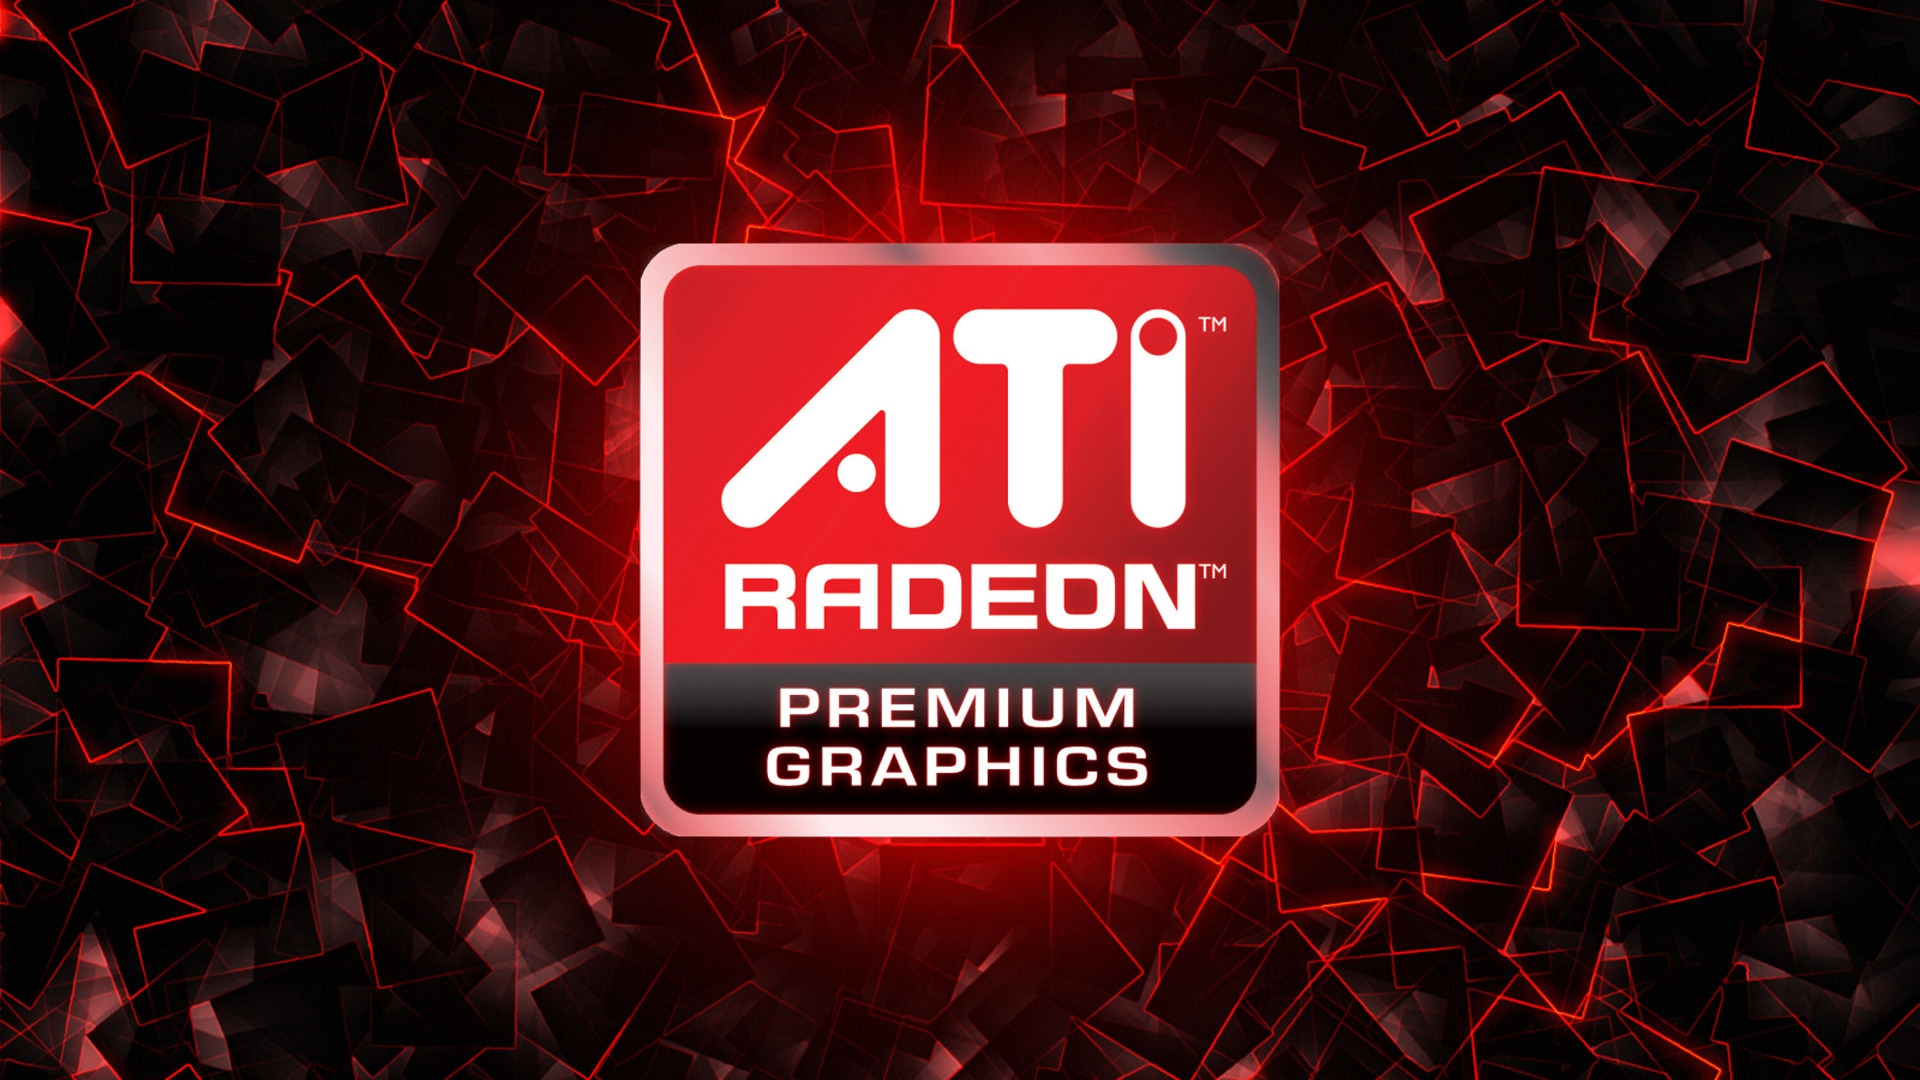 ATI Radeon Premium Graphics for 1920 x 1080 HDTV 1080p resolution